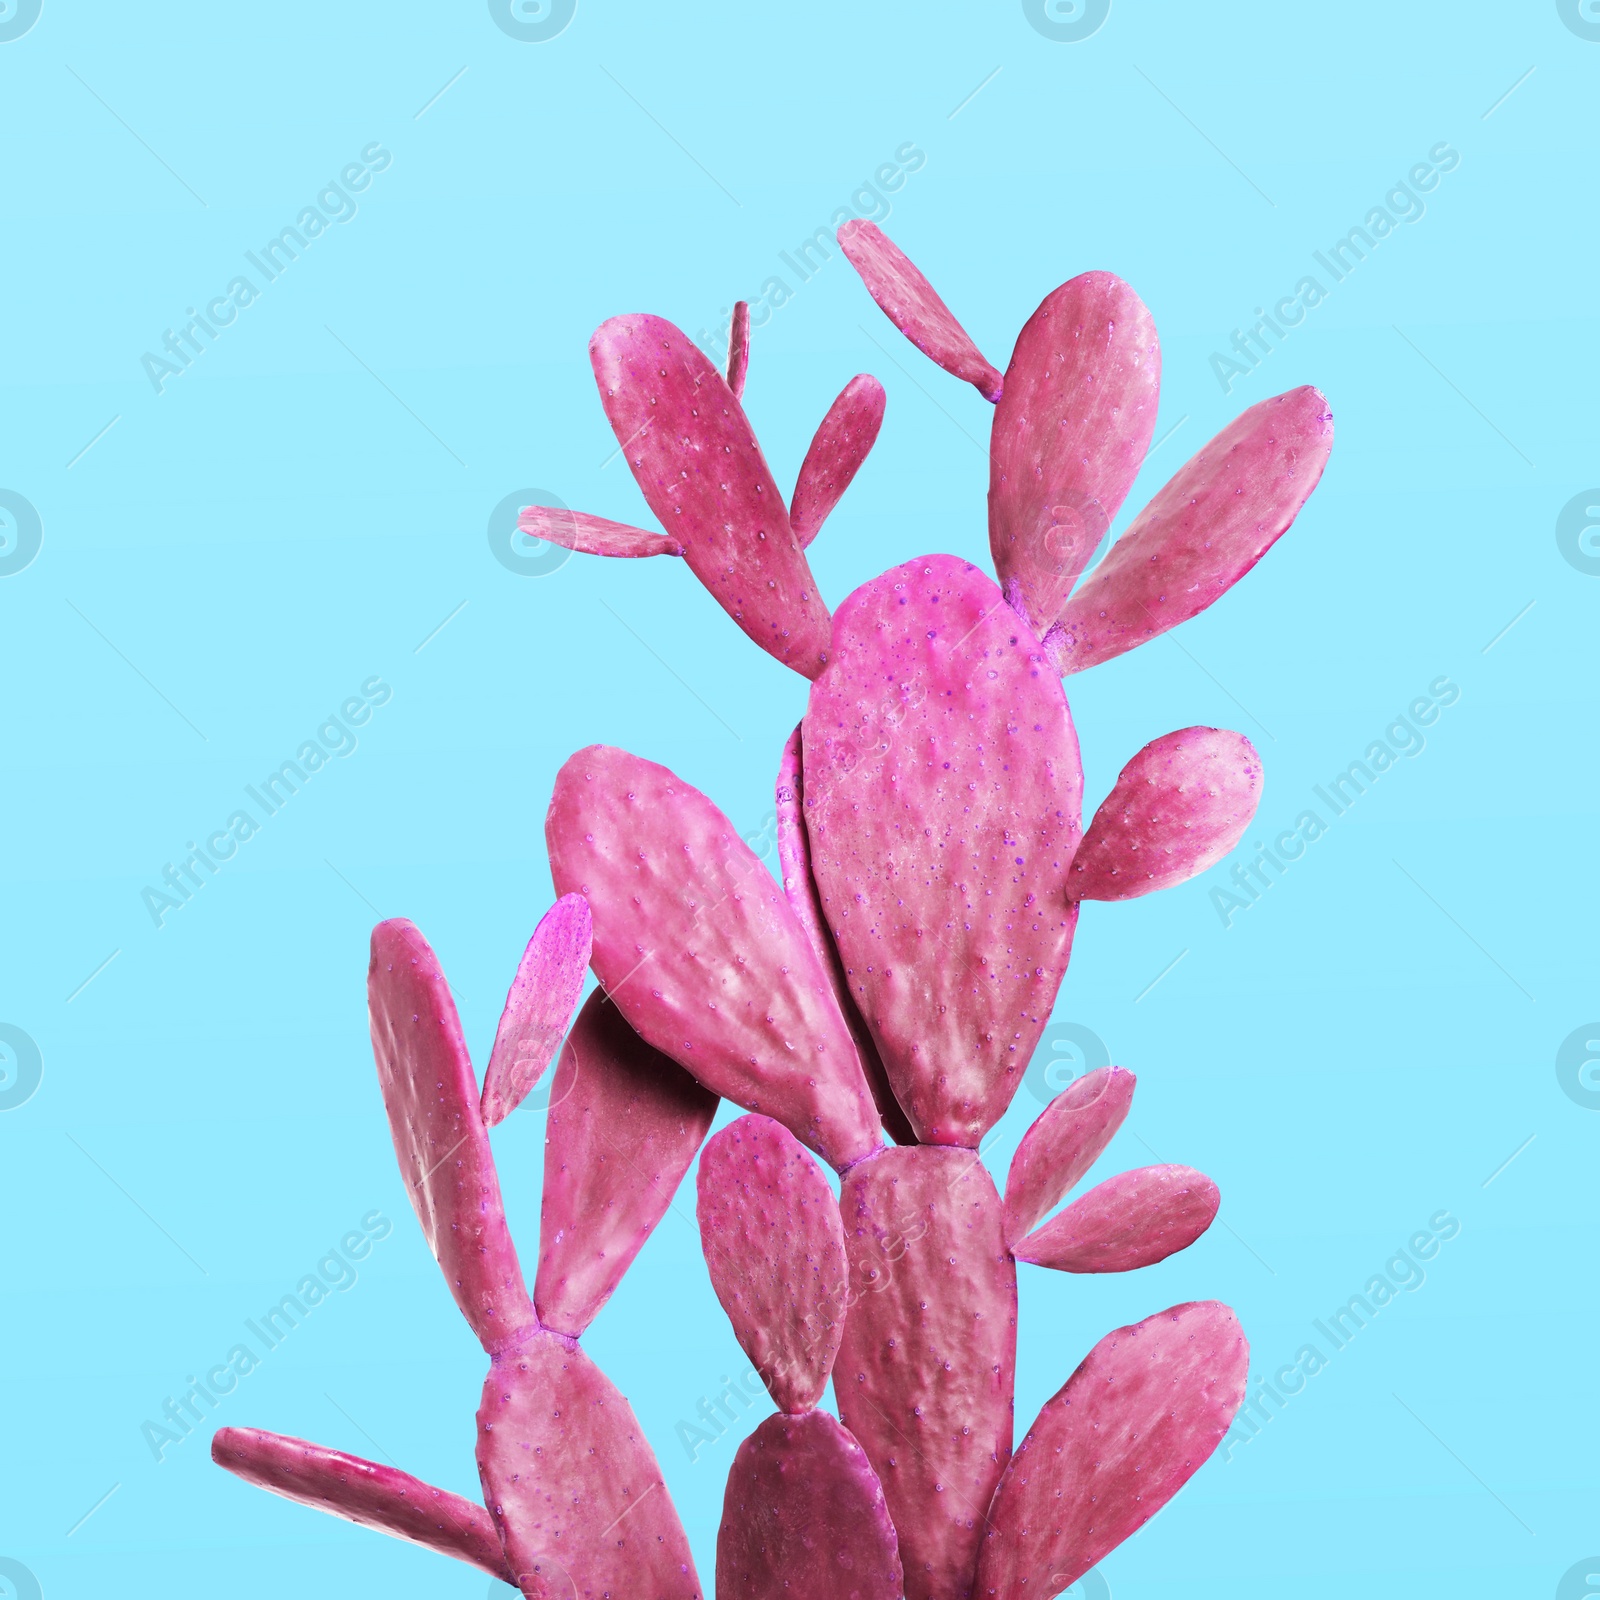 Image of Pink cactus on light blue background. Creative design